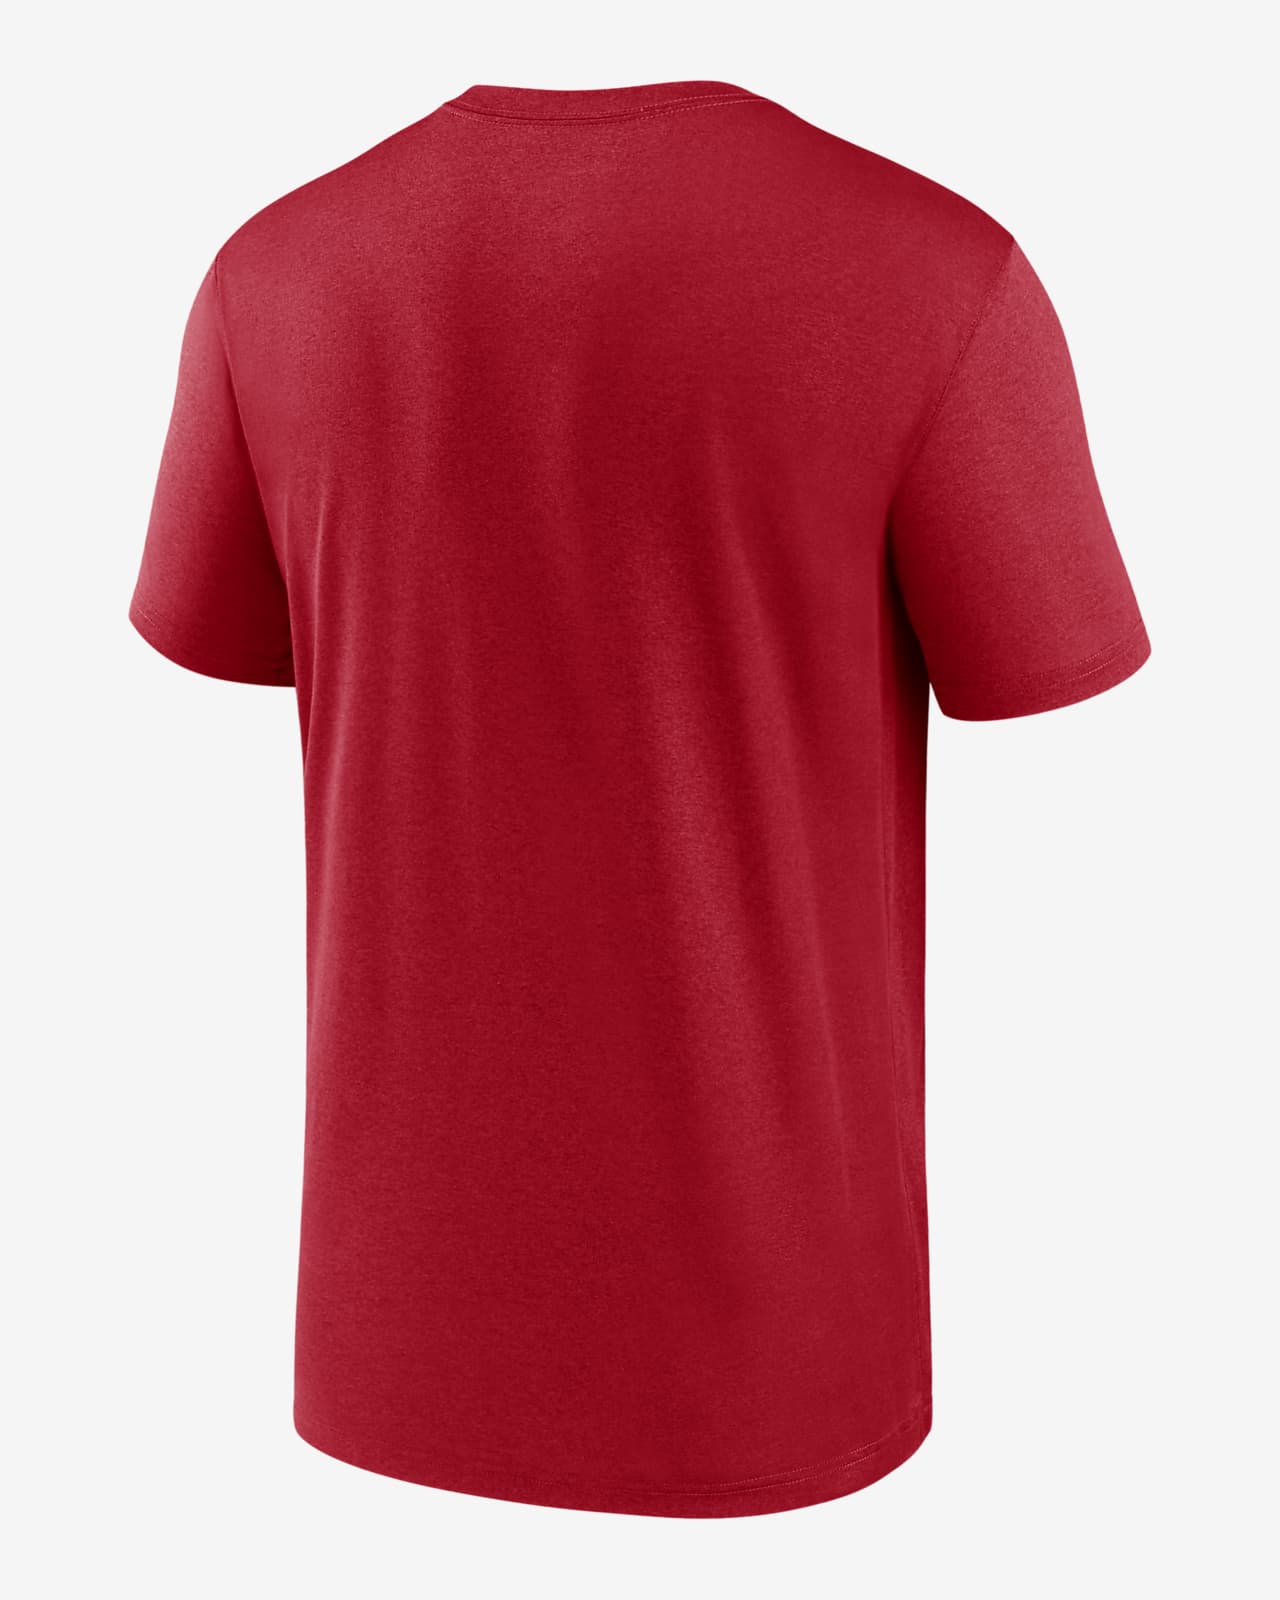 Genuine Merchandise, Shirts, St Louis Cardinals Mens Baseball Style Tshirt  Size Xl